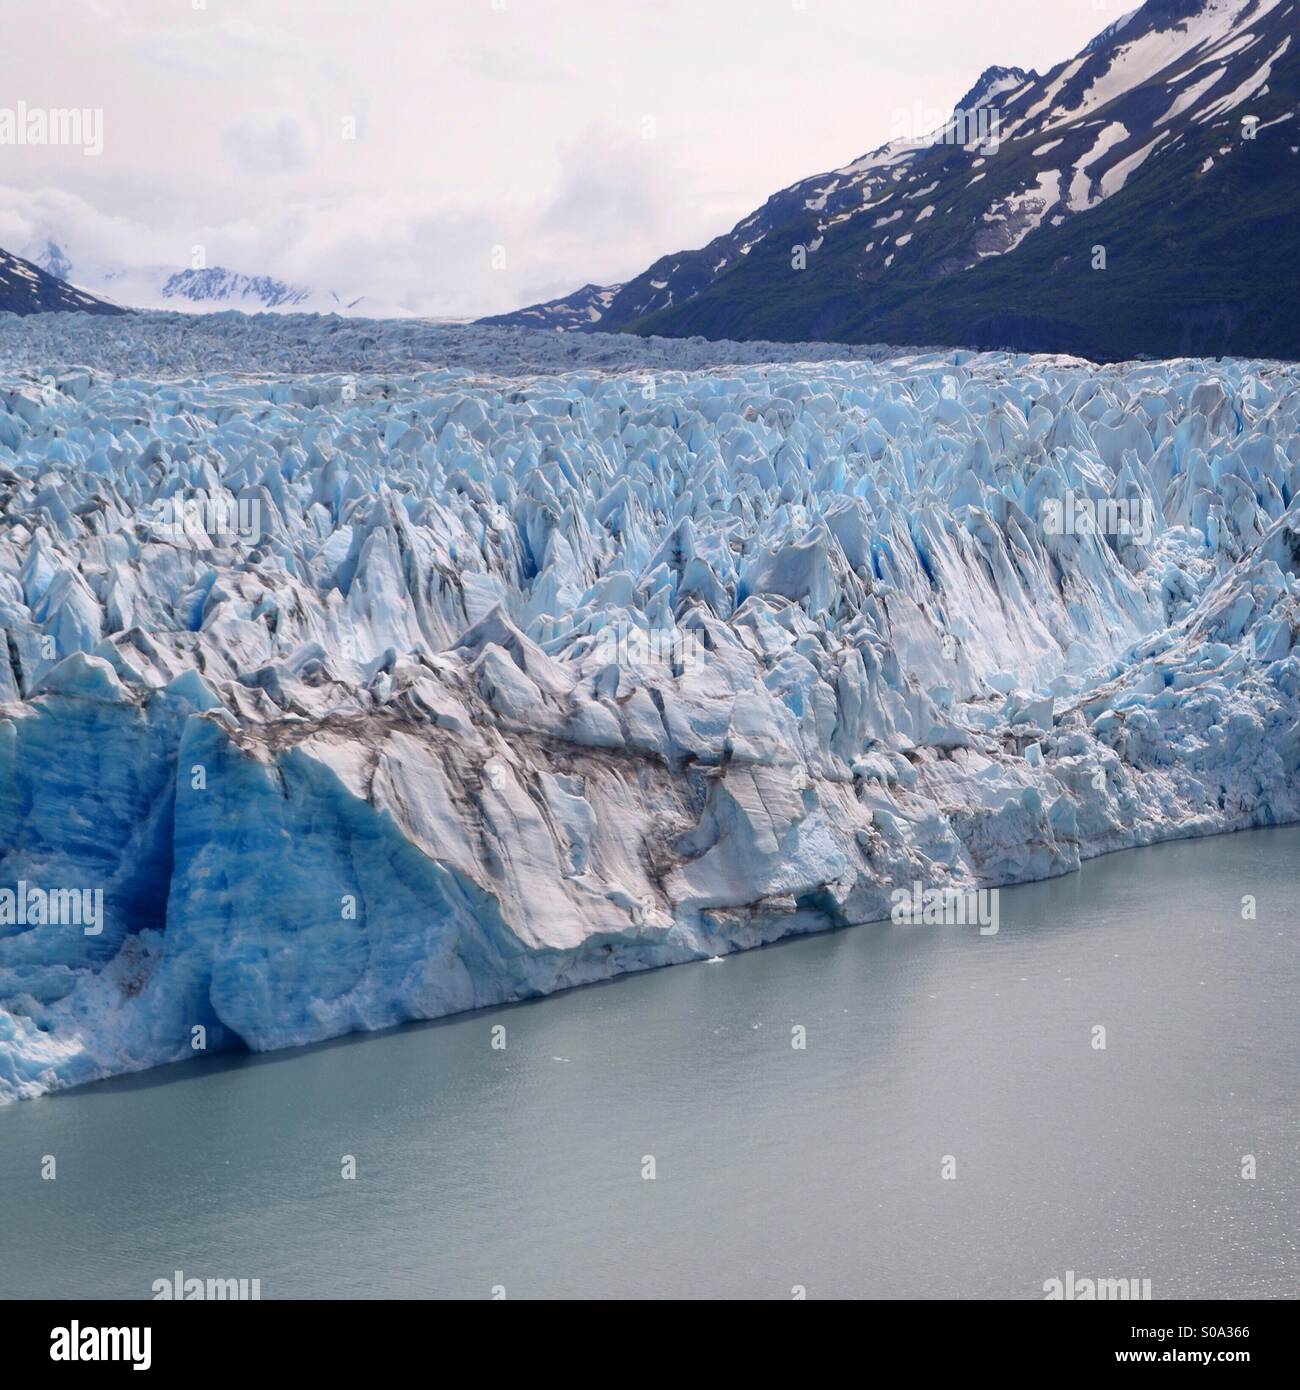 Seaplane view of glacier and glacial melt - Alaska Stock Photo